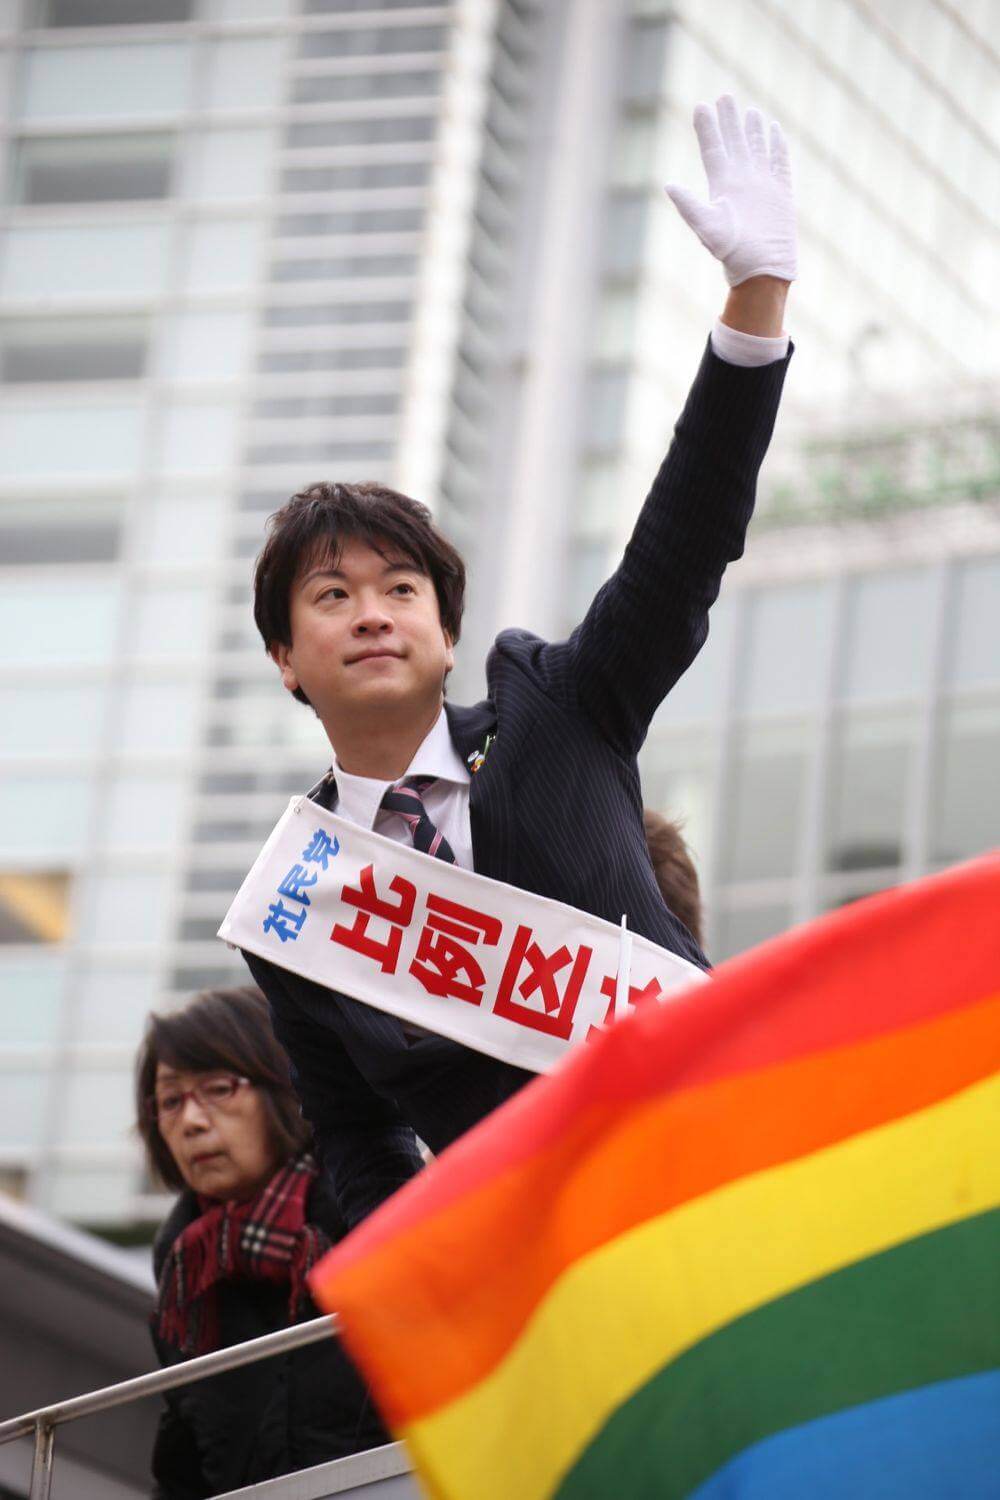 Taiga Ishikawa primo gay dichiarato eletto al parlamento giapponese - Taiga Ishikawa 2 - Gay.it